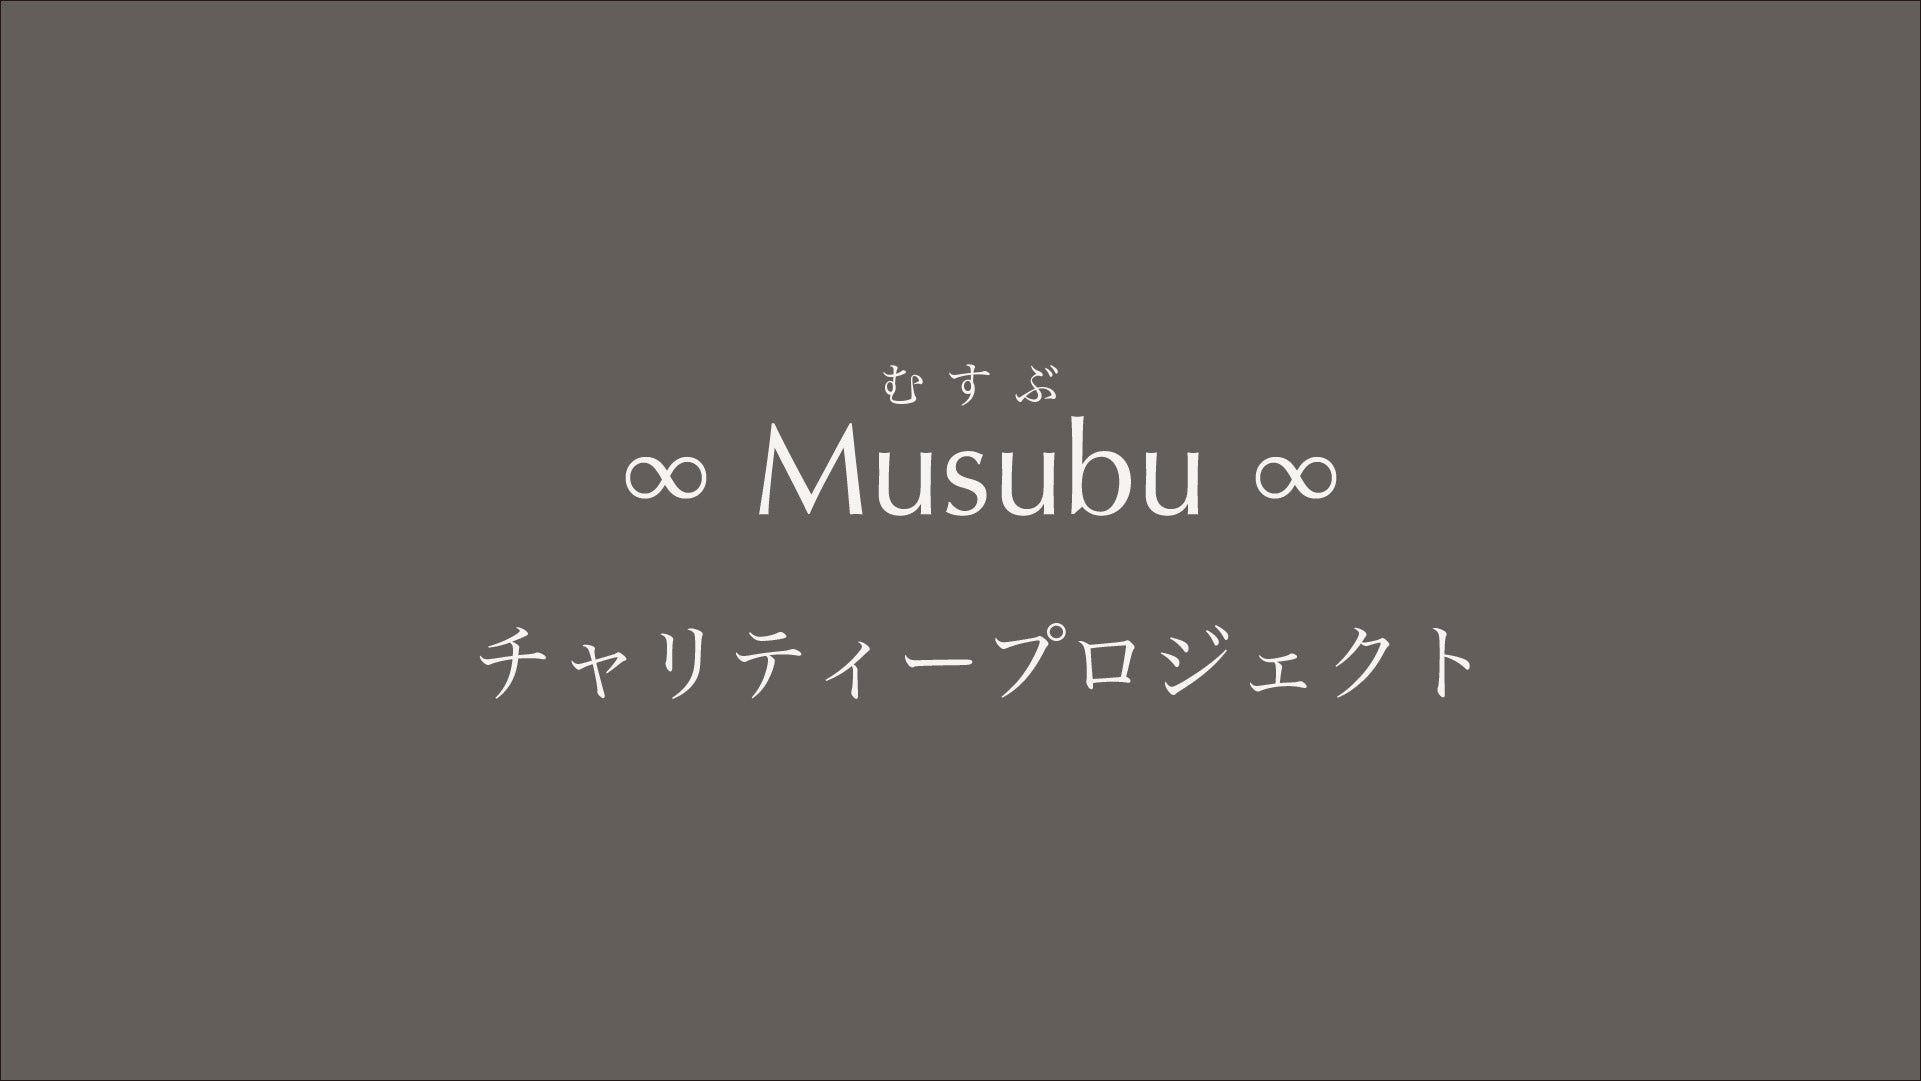 ∞ Musubu（むすぶ）チャリティープロジェクト∞